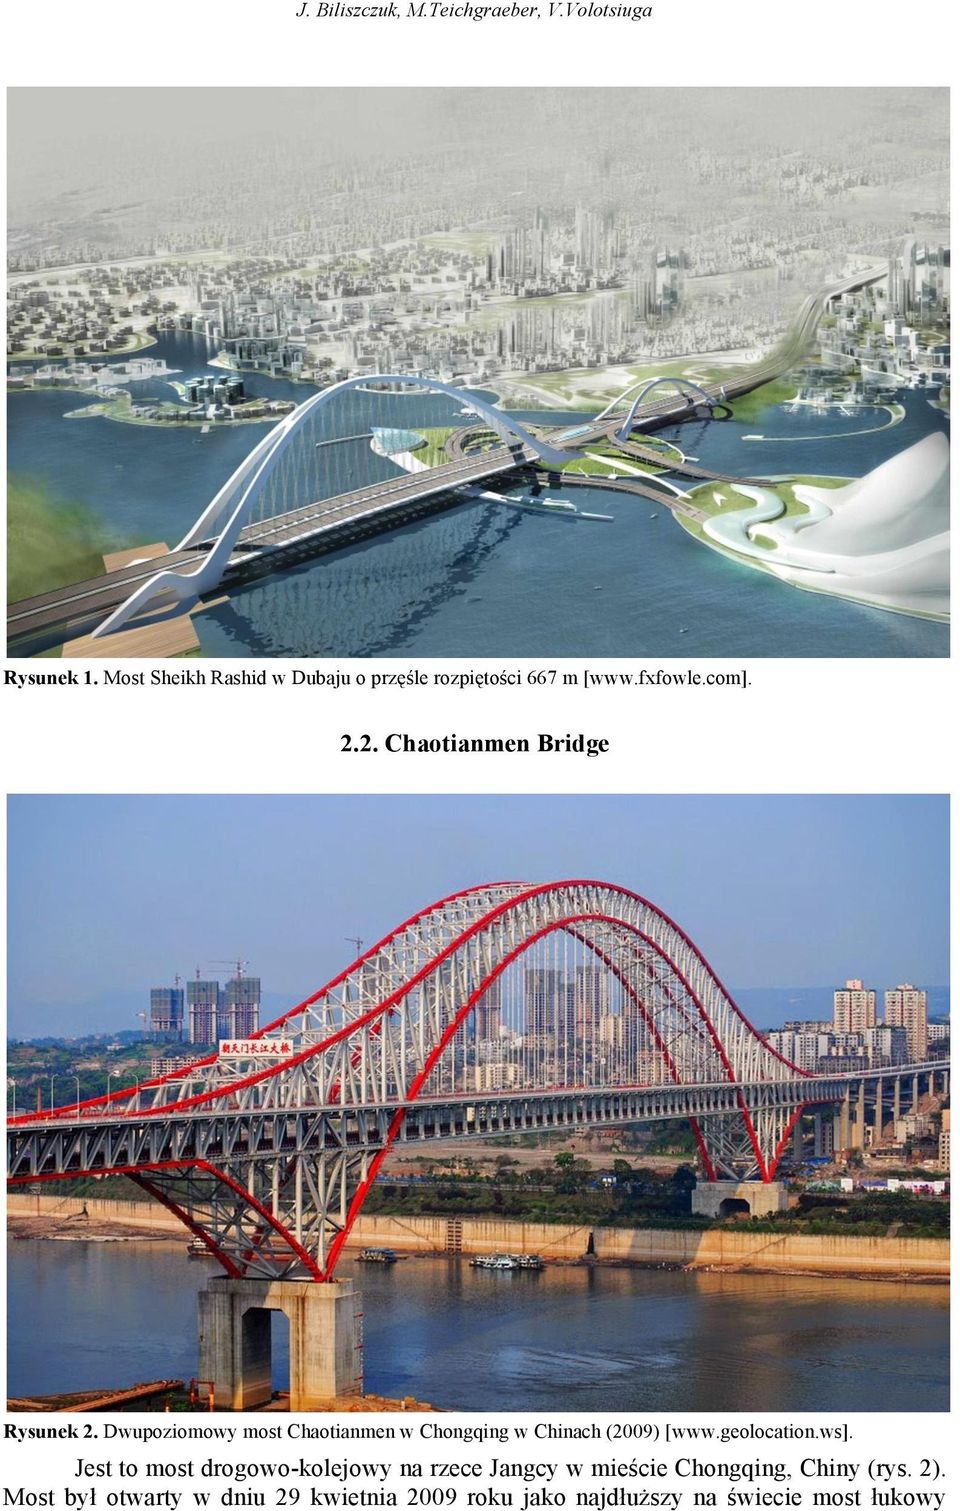 Dwupoziomowy most Chaotianmen w Chongqing w Chinach (2009) [www.geolocation.ws].